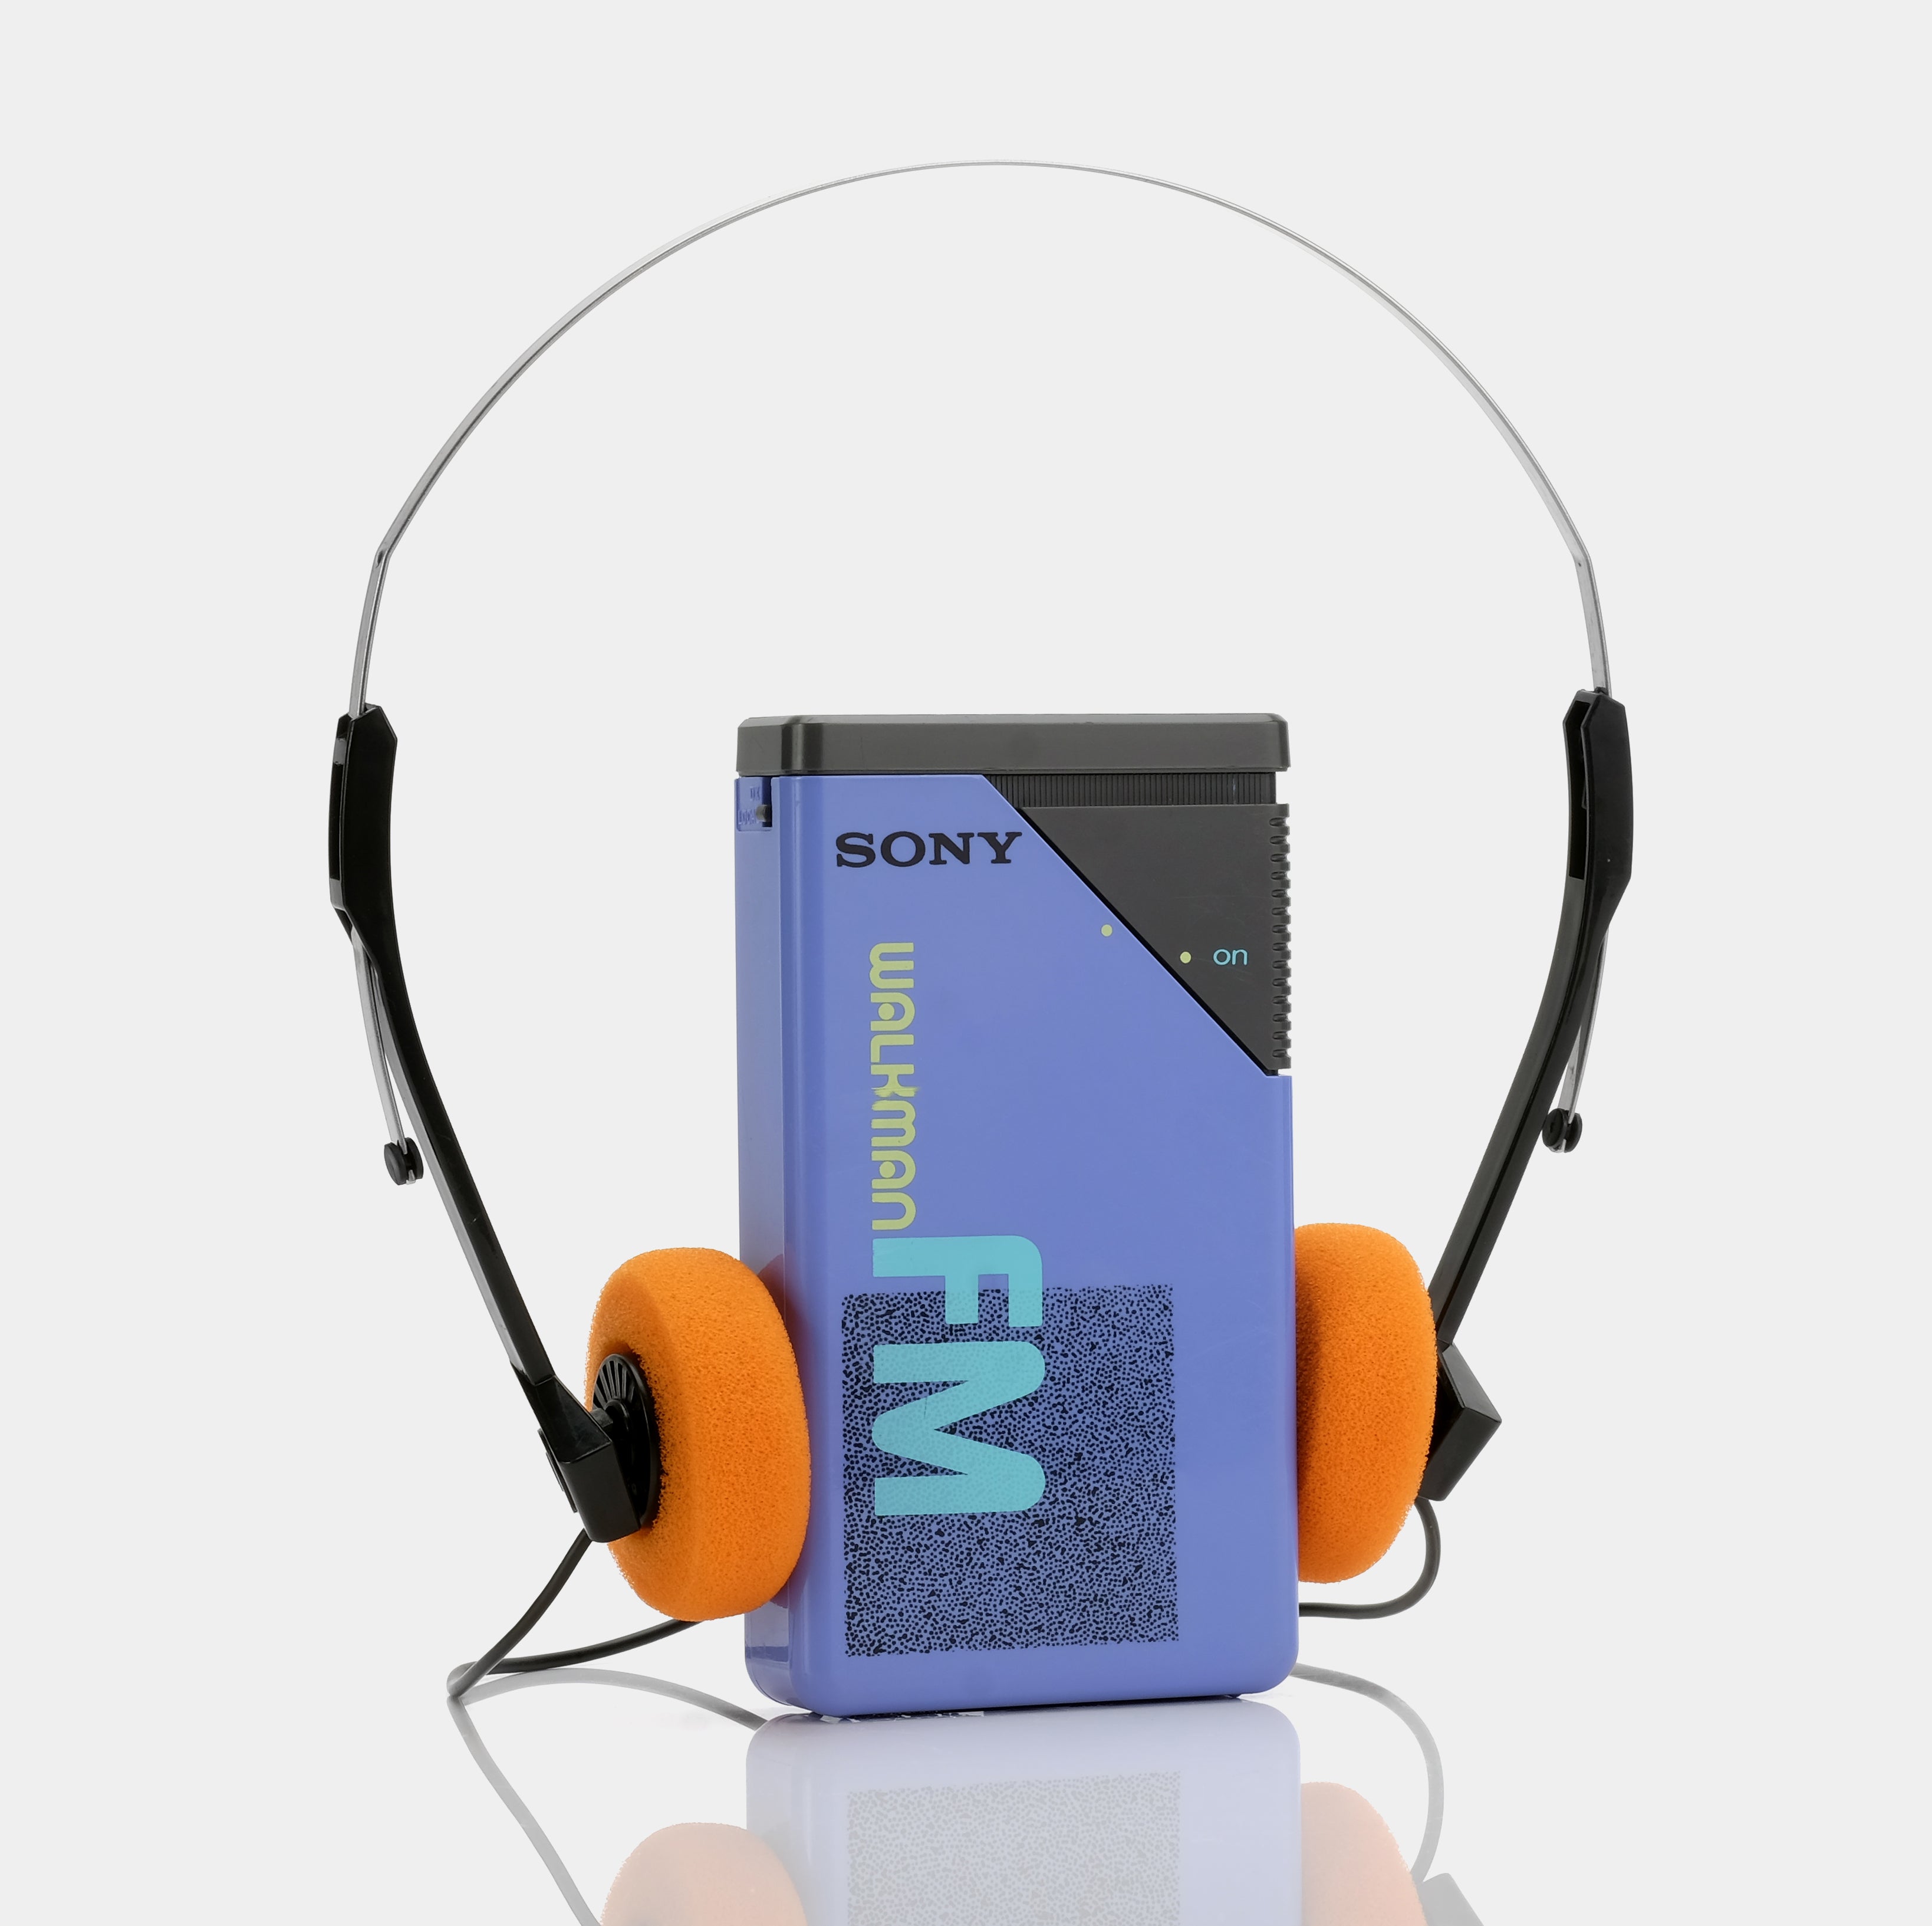 Sony Walkman SRF-16W Blue FM Portable Radio